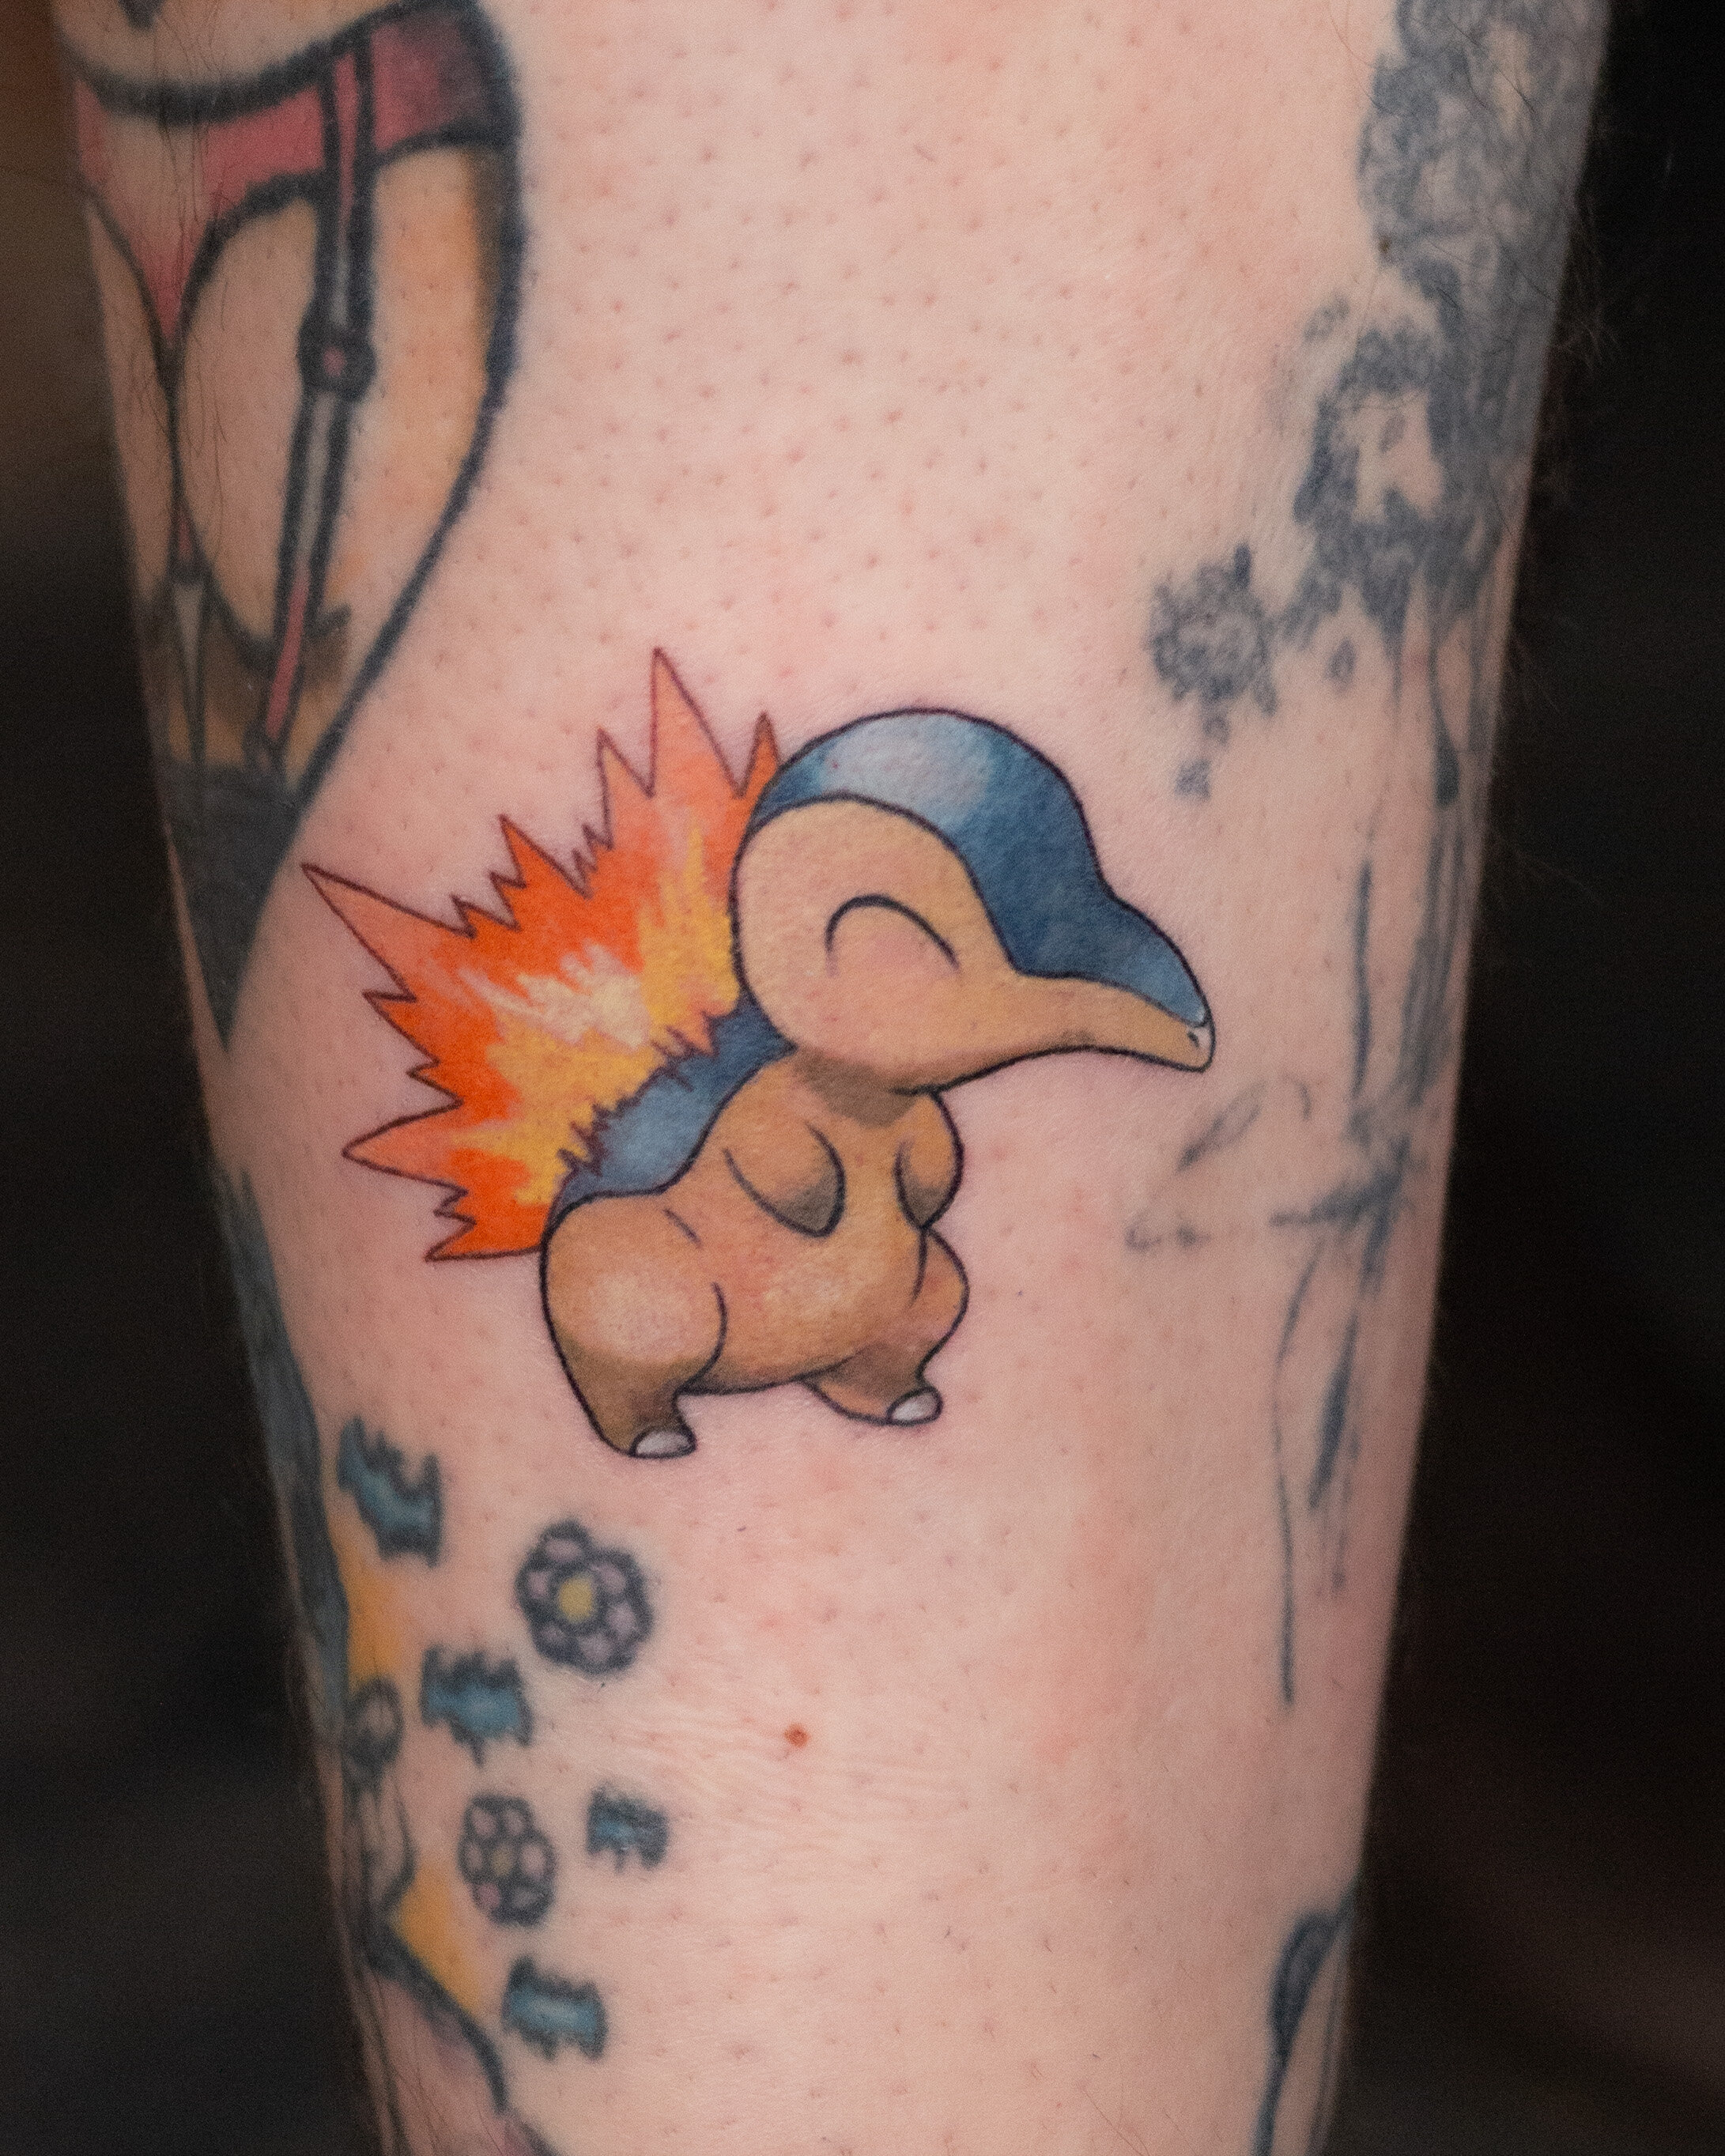 Pokemon-inspired tattoo art, all-day Pokemon Go event Saturday in